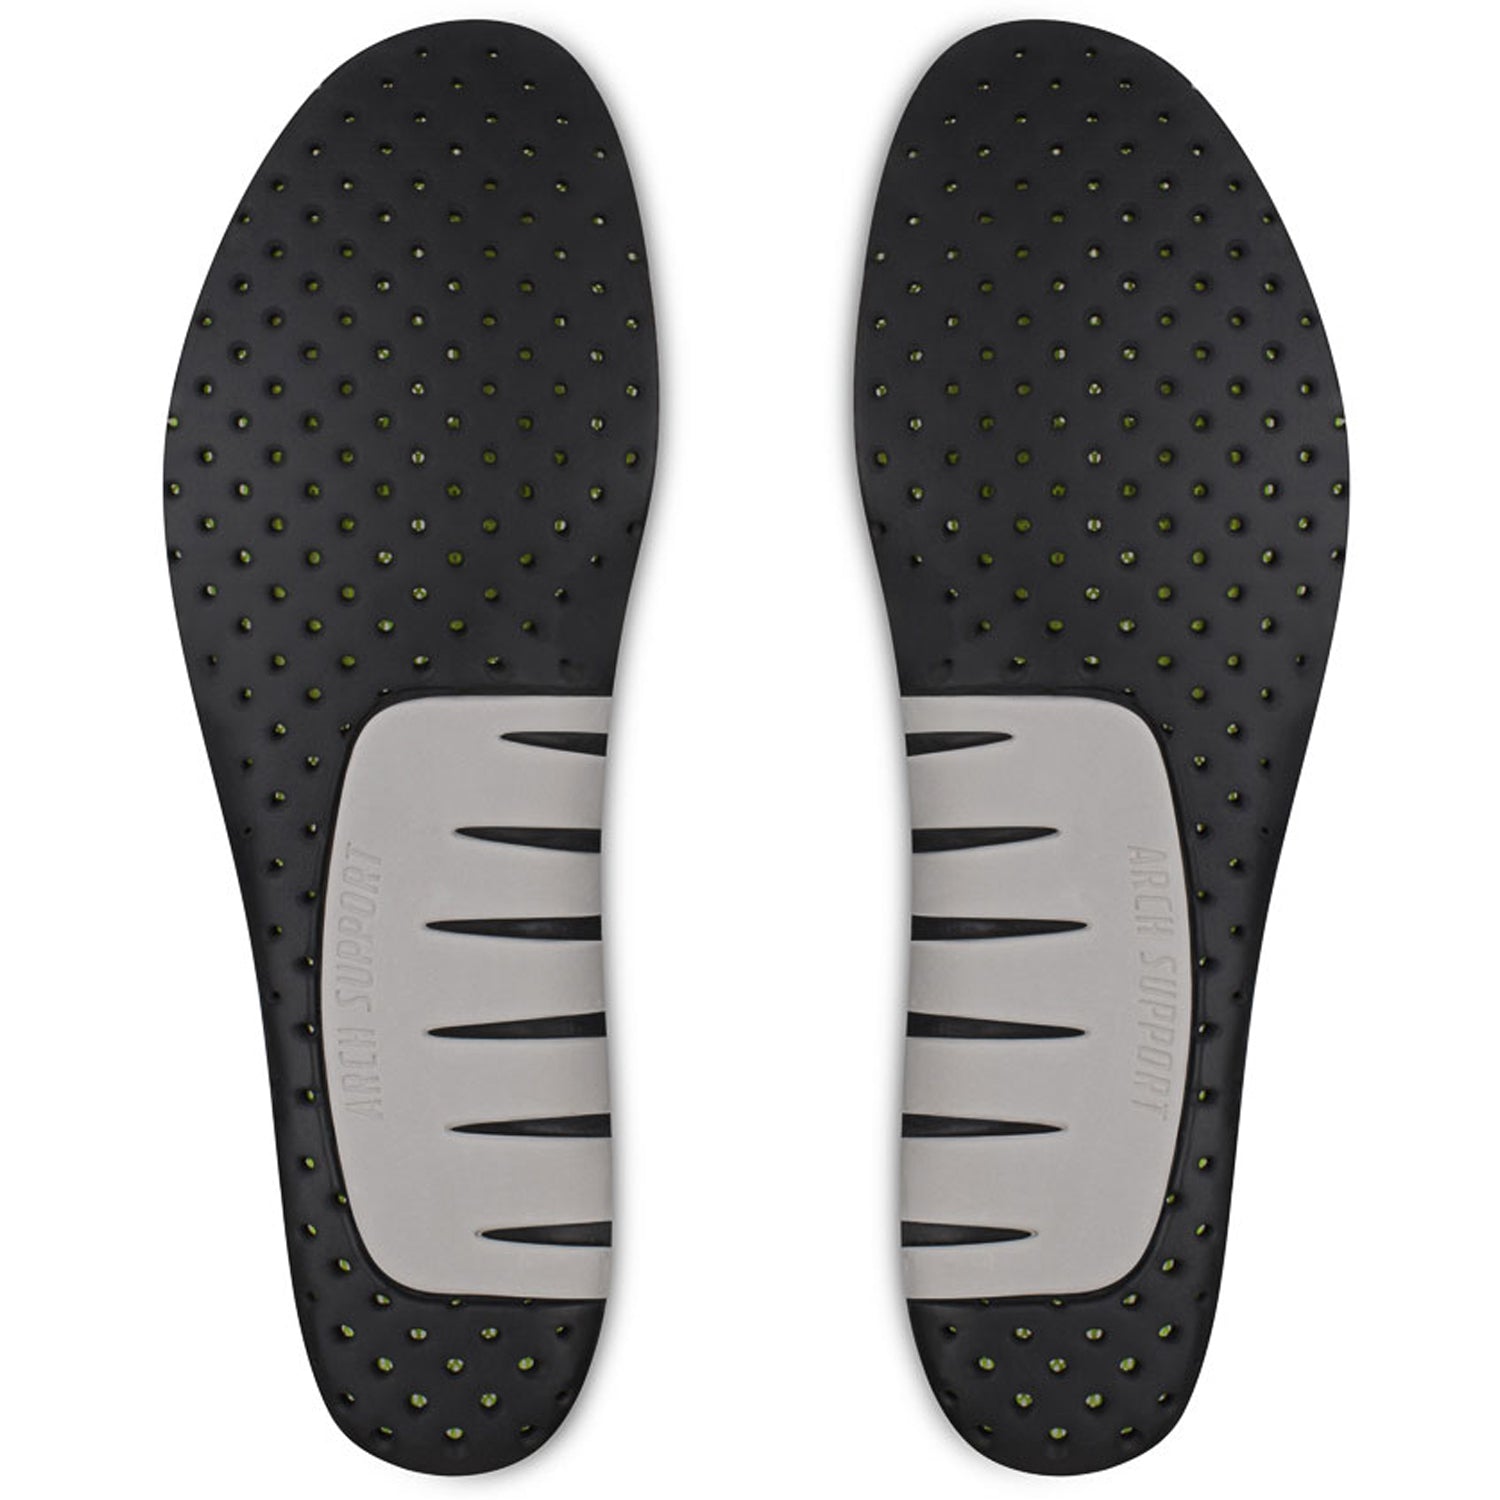 Fizik Vento Stabilita Carbon shoes - Silver | All4cycling